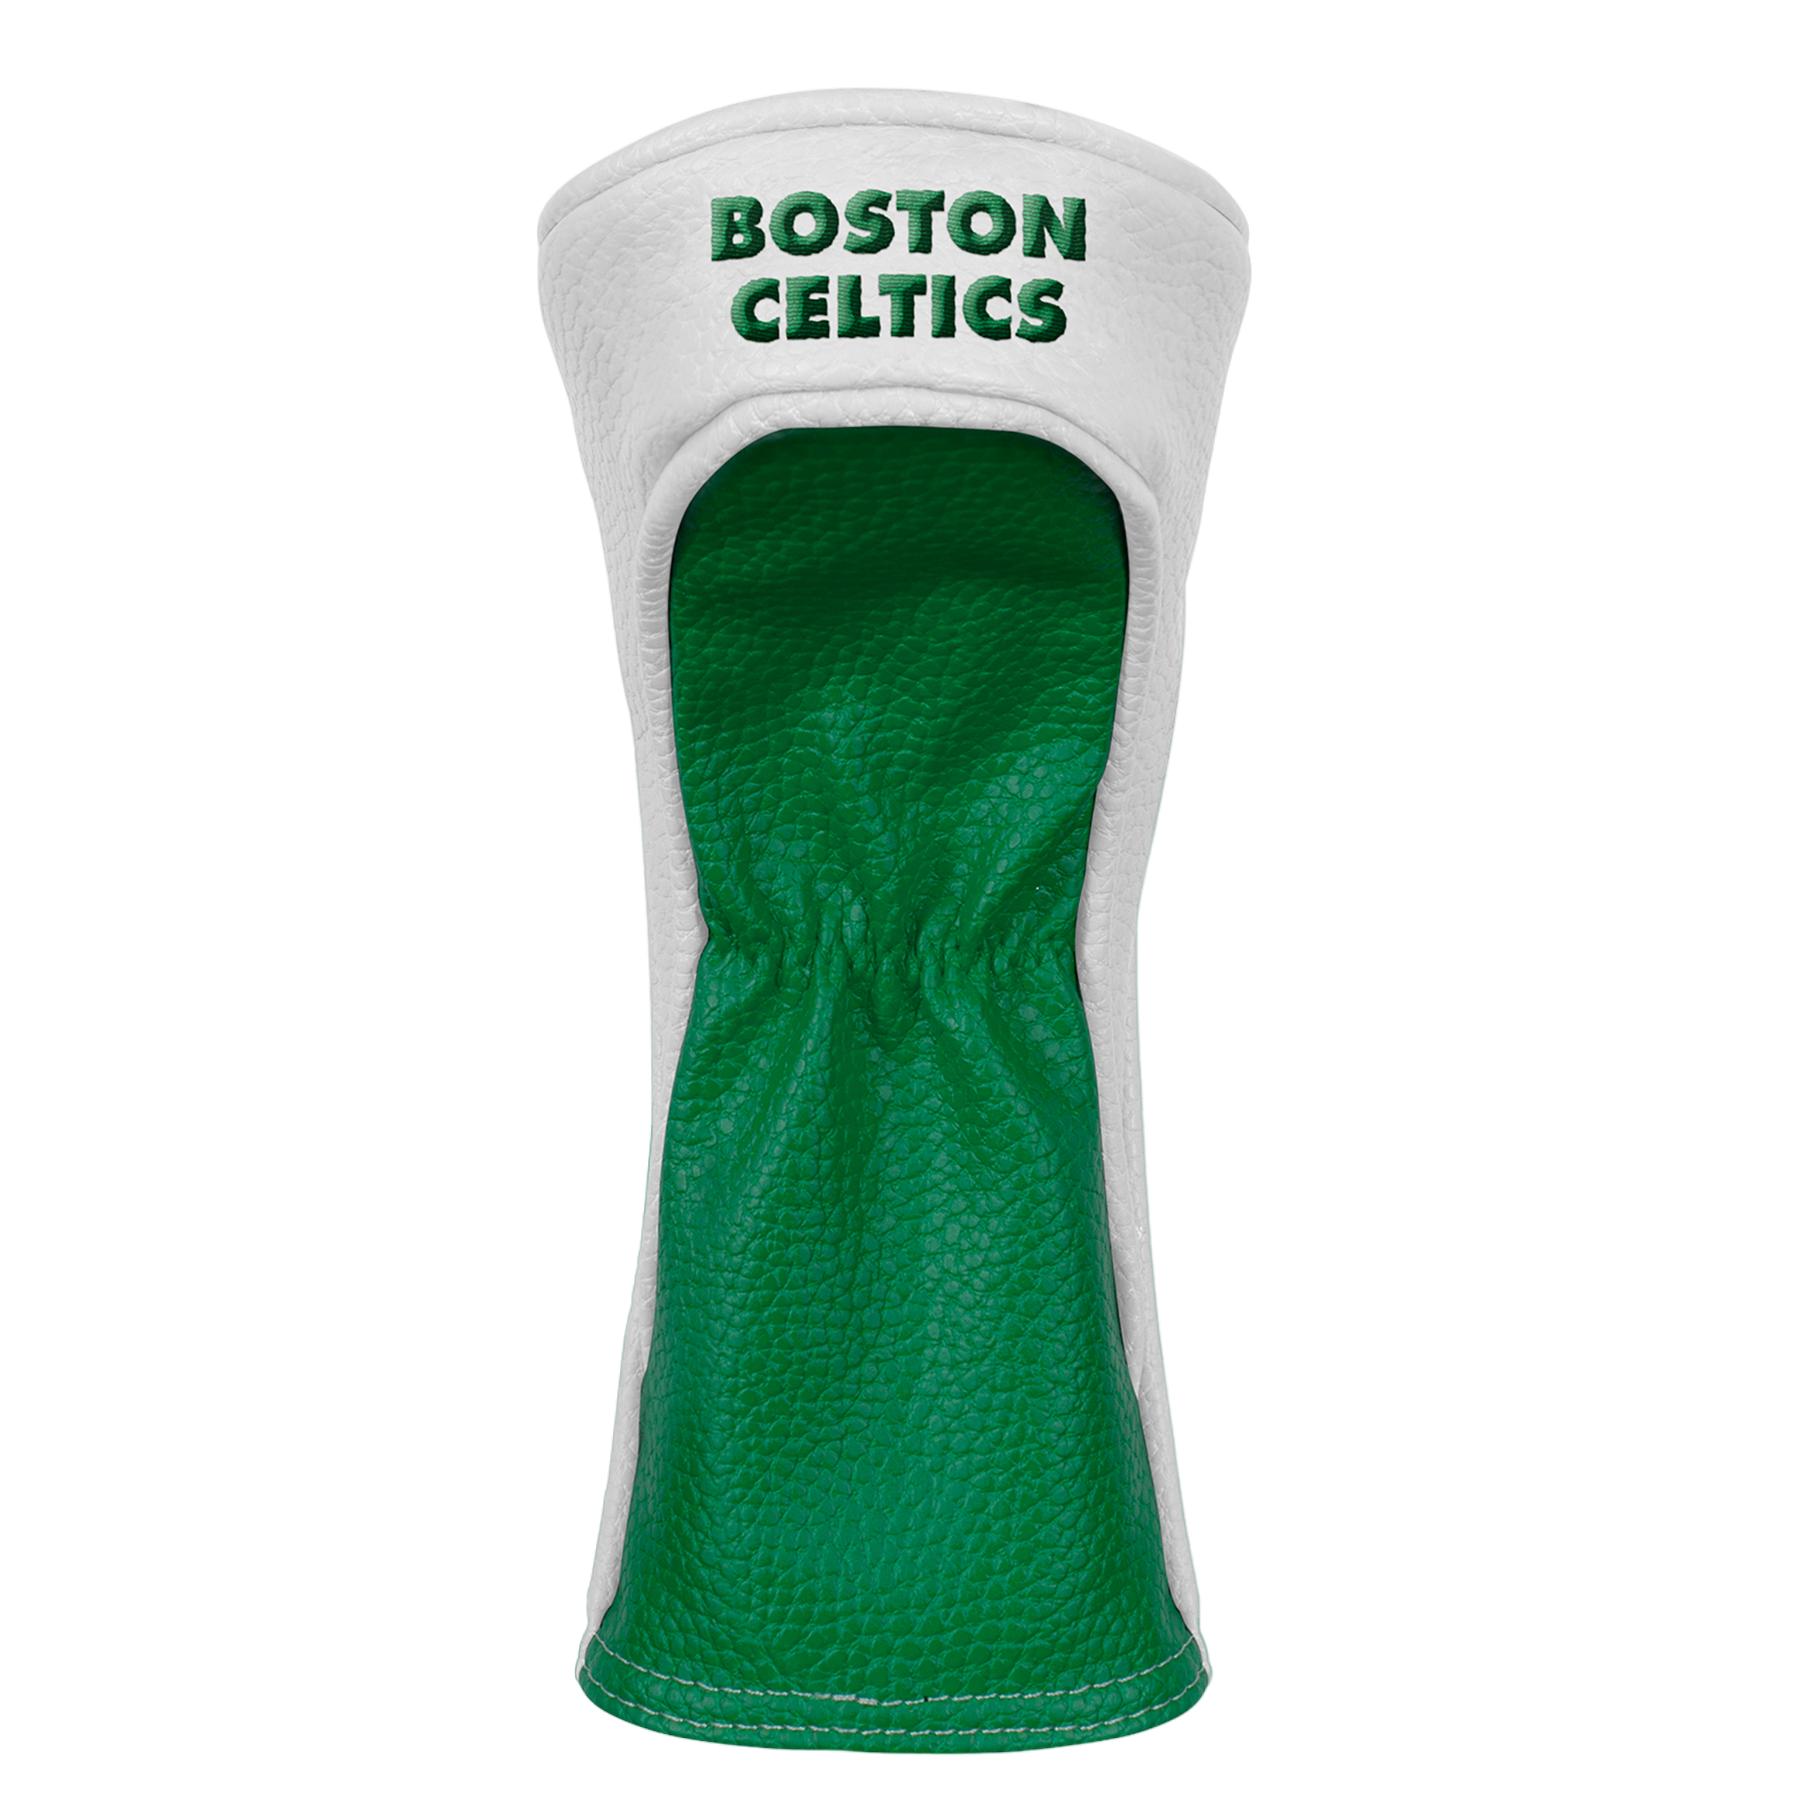 Boston Celtics Individual Hybrid Headcover